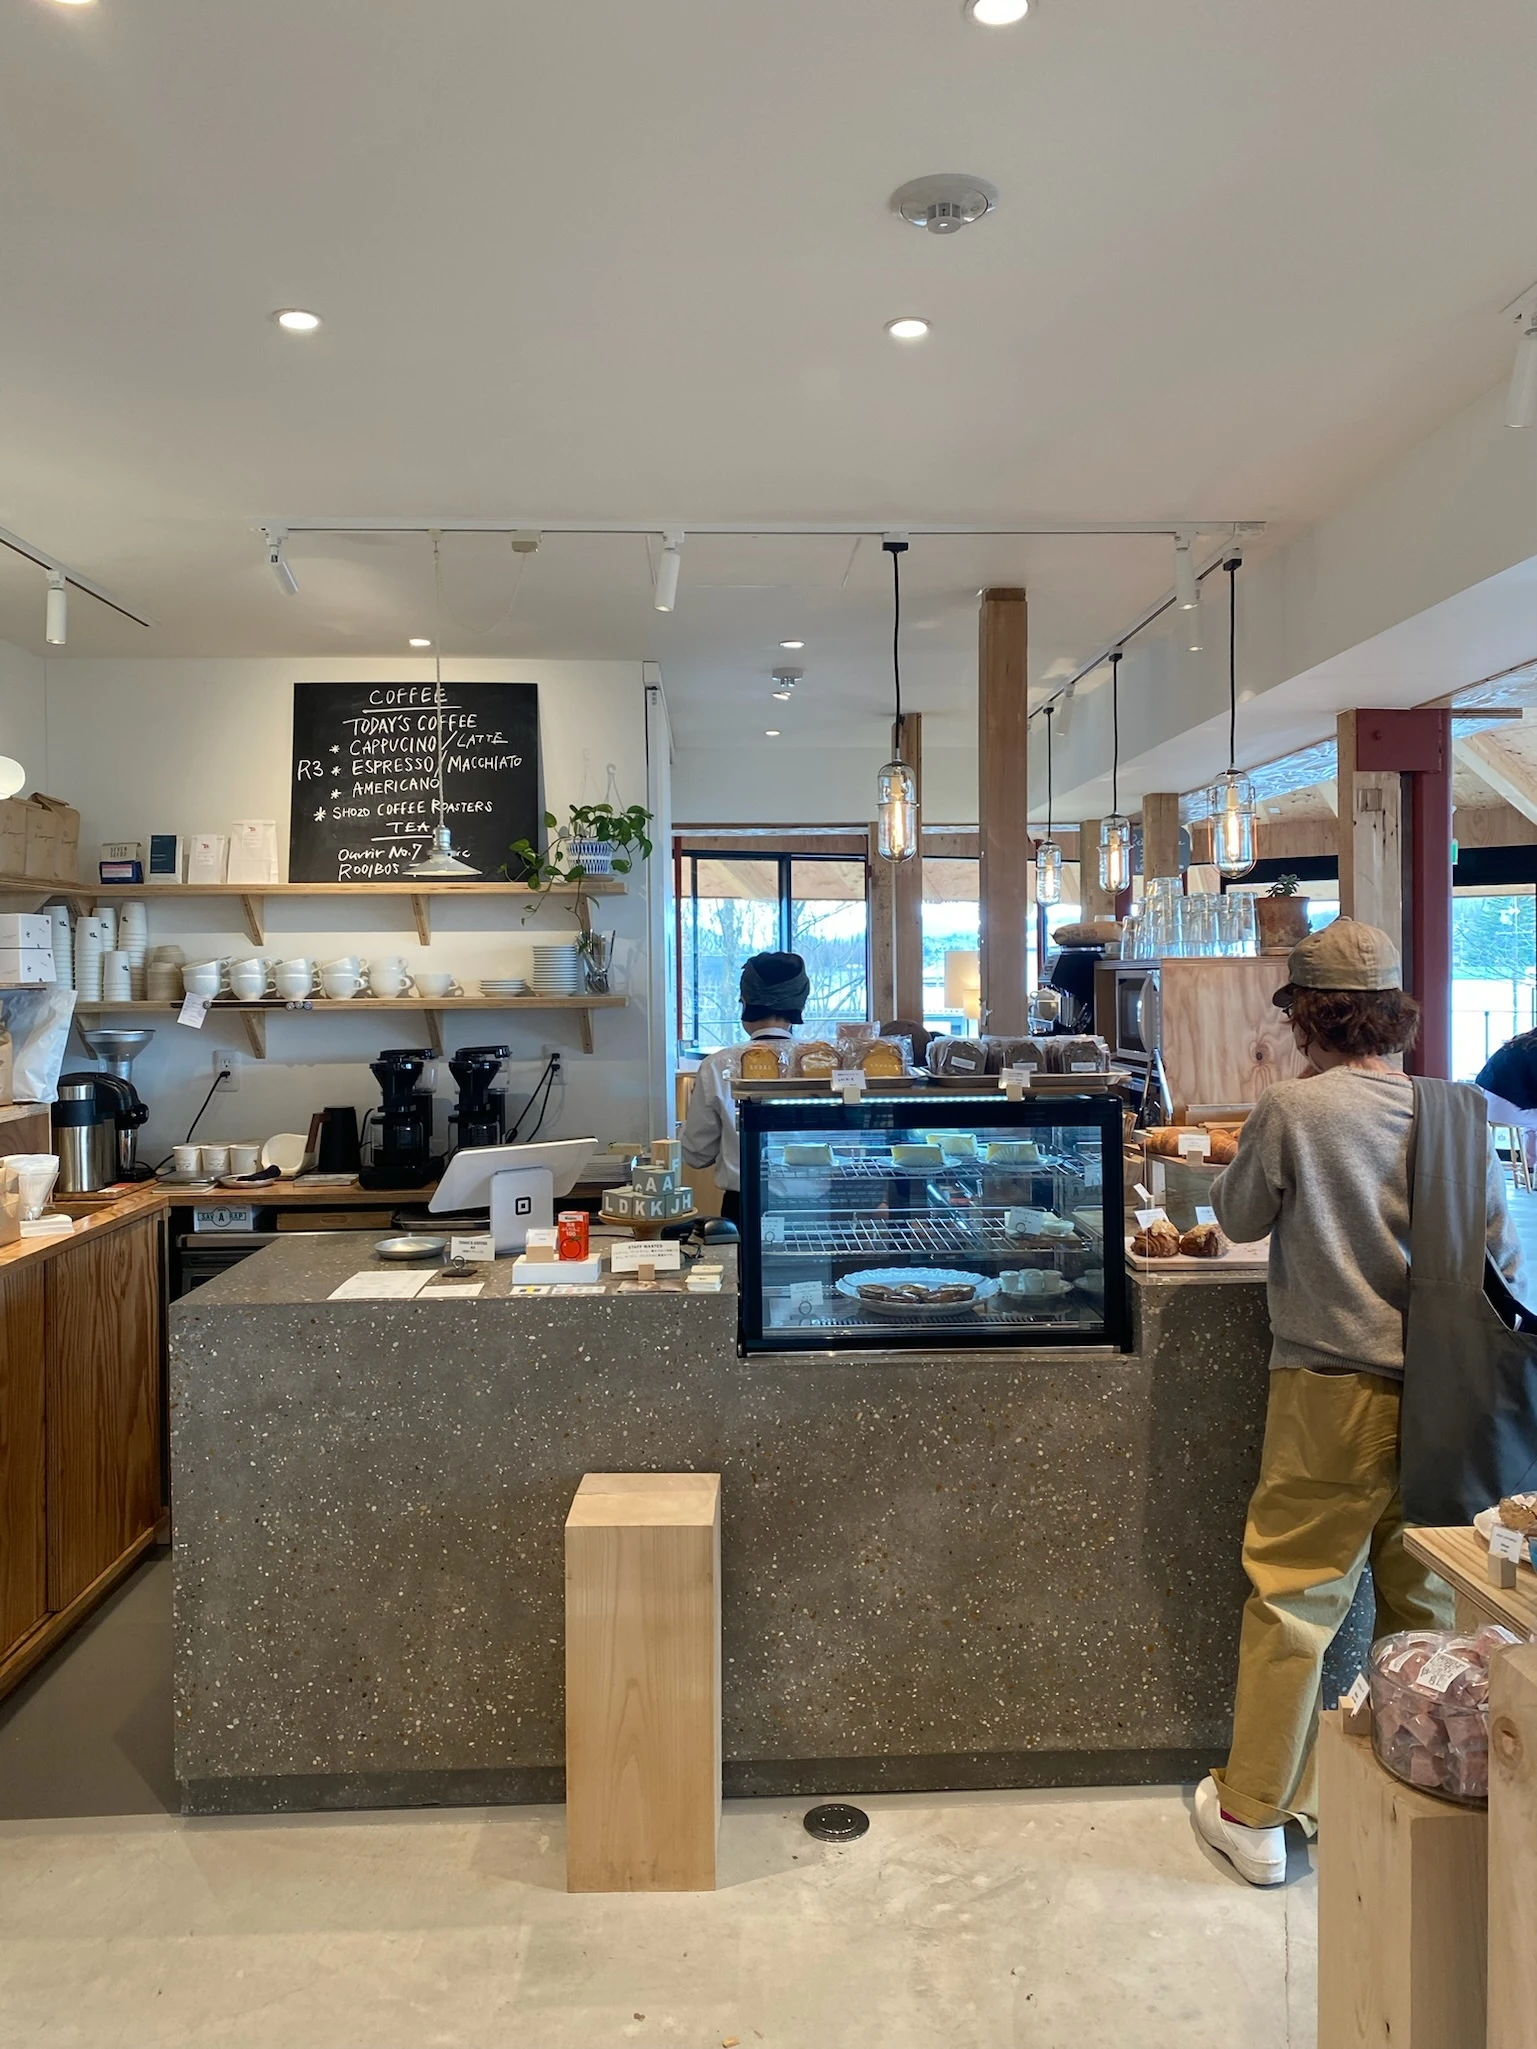 『Karuizawa Commongrounds』内のカフェ「SHOZO COFFEE」の店内。ケーキやパン、焼き菓子が並んでいる。